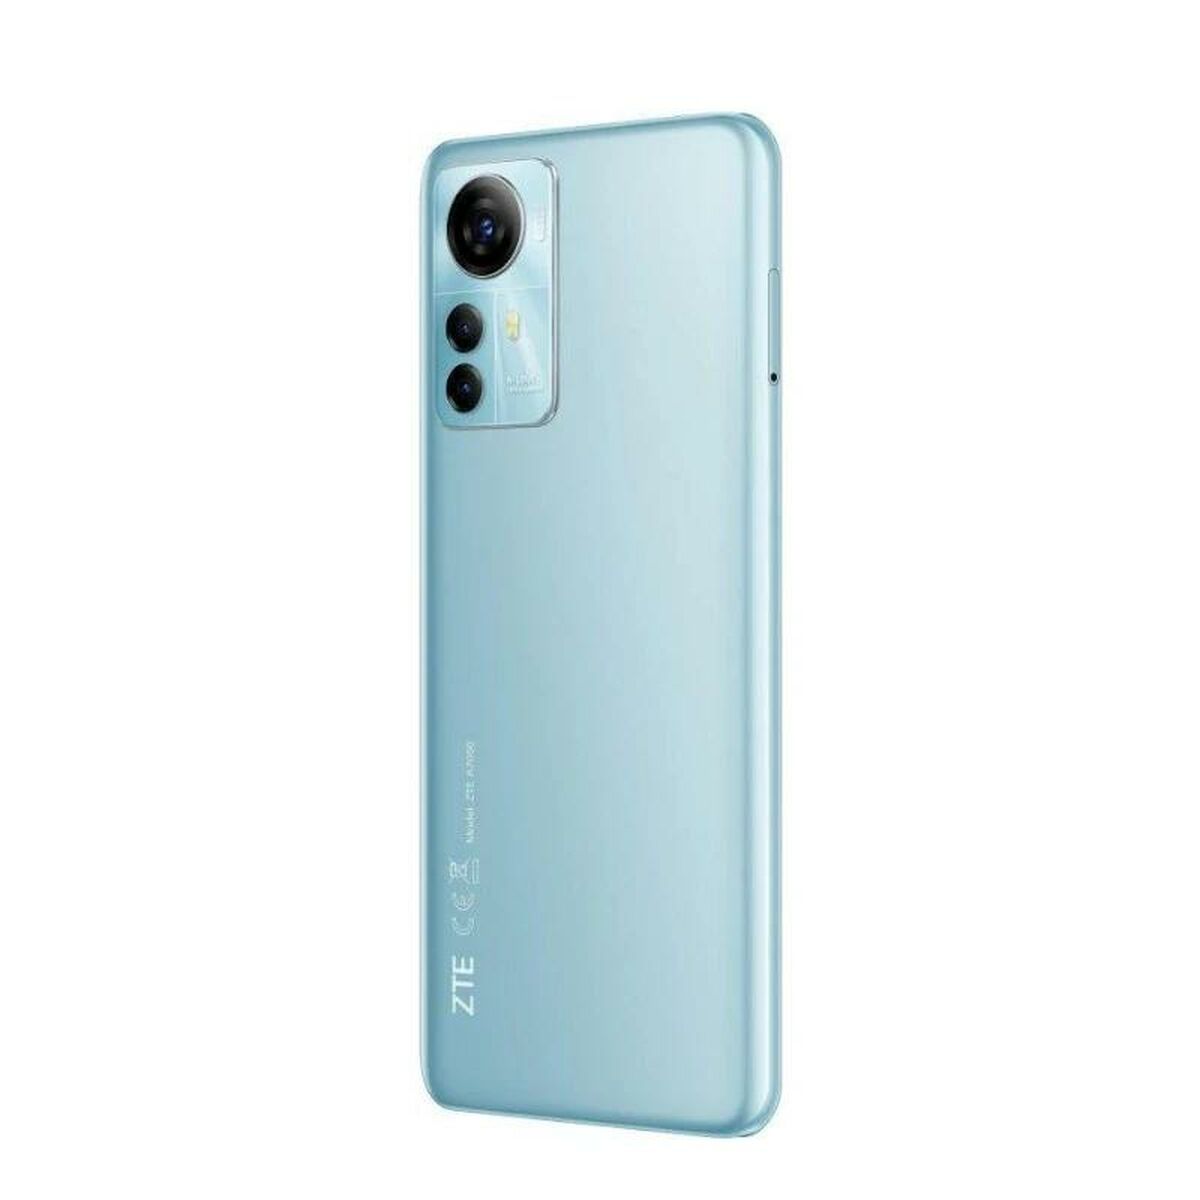 Smartphone ZTE Blade A72s 64 GB Bleu UNISOC T606 3 GB RAM